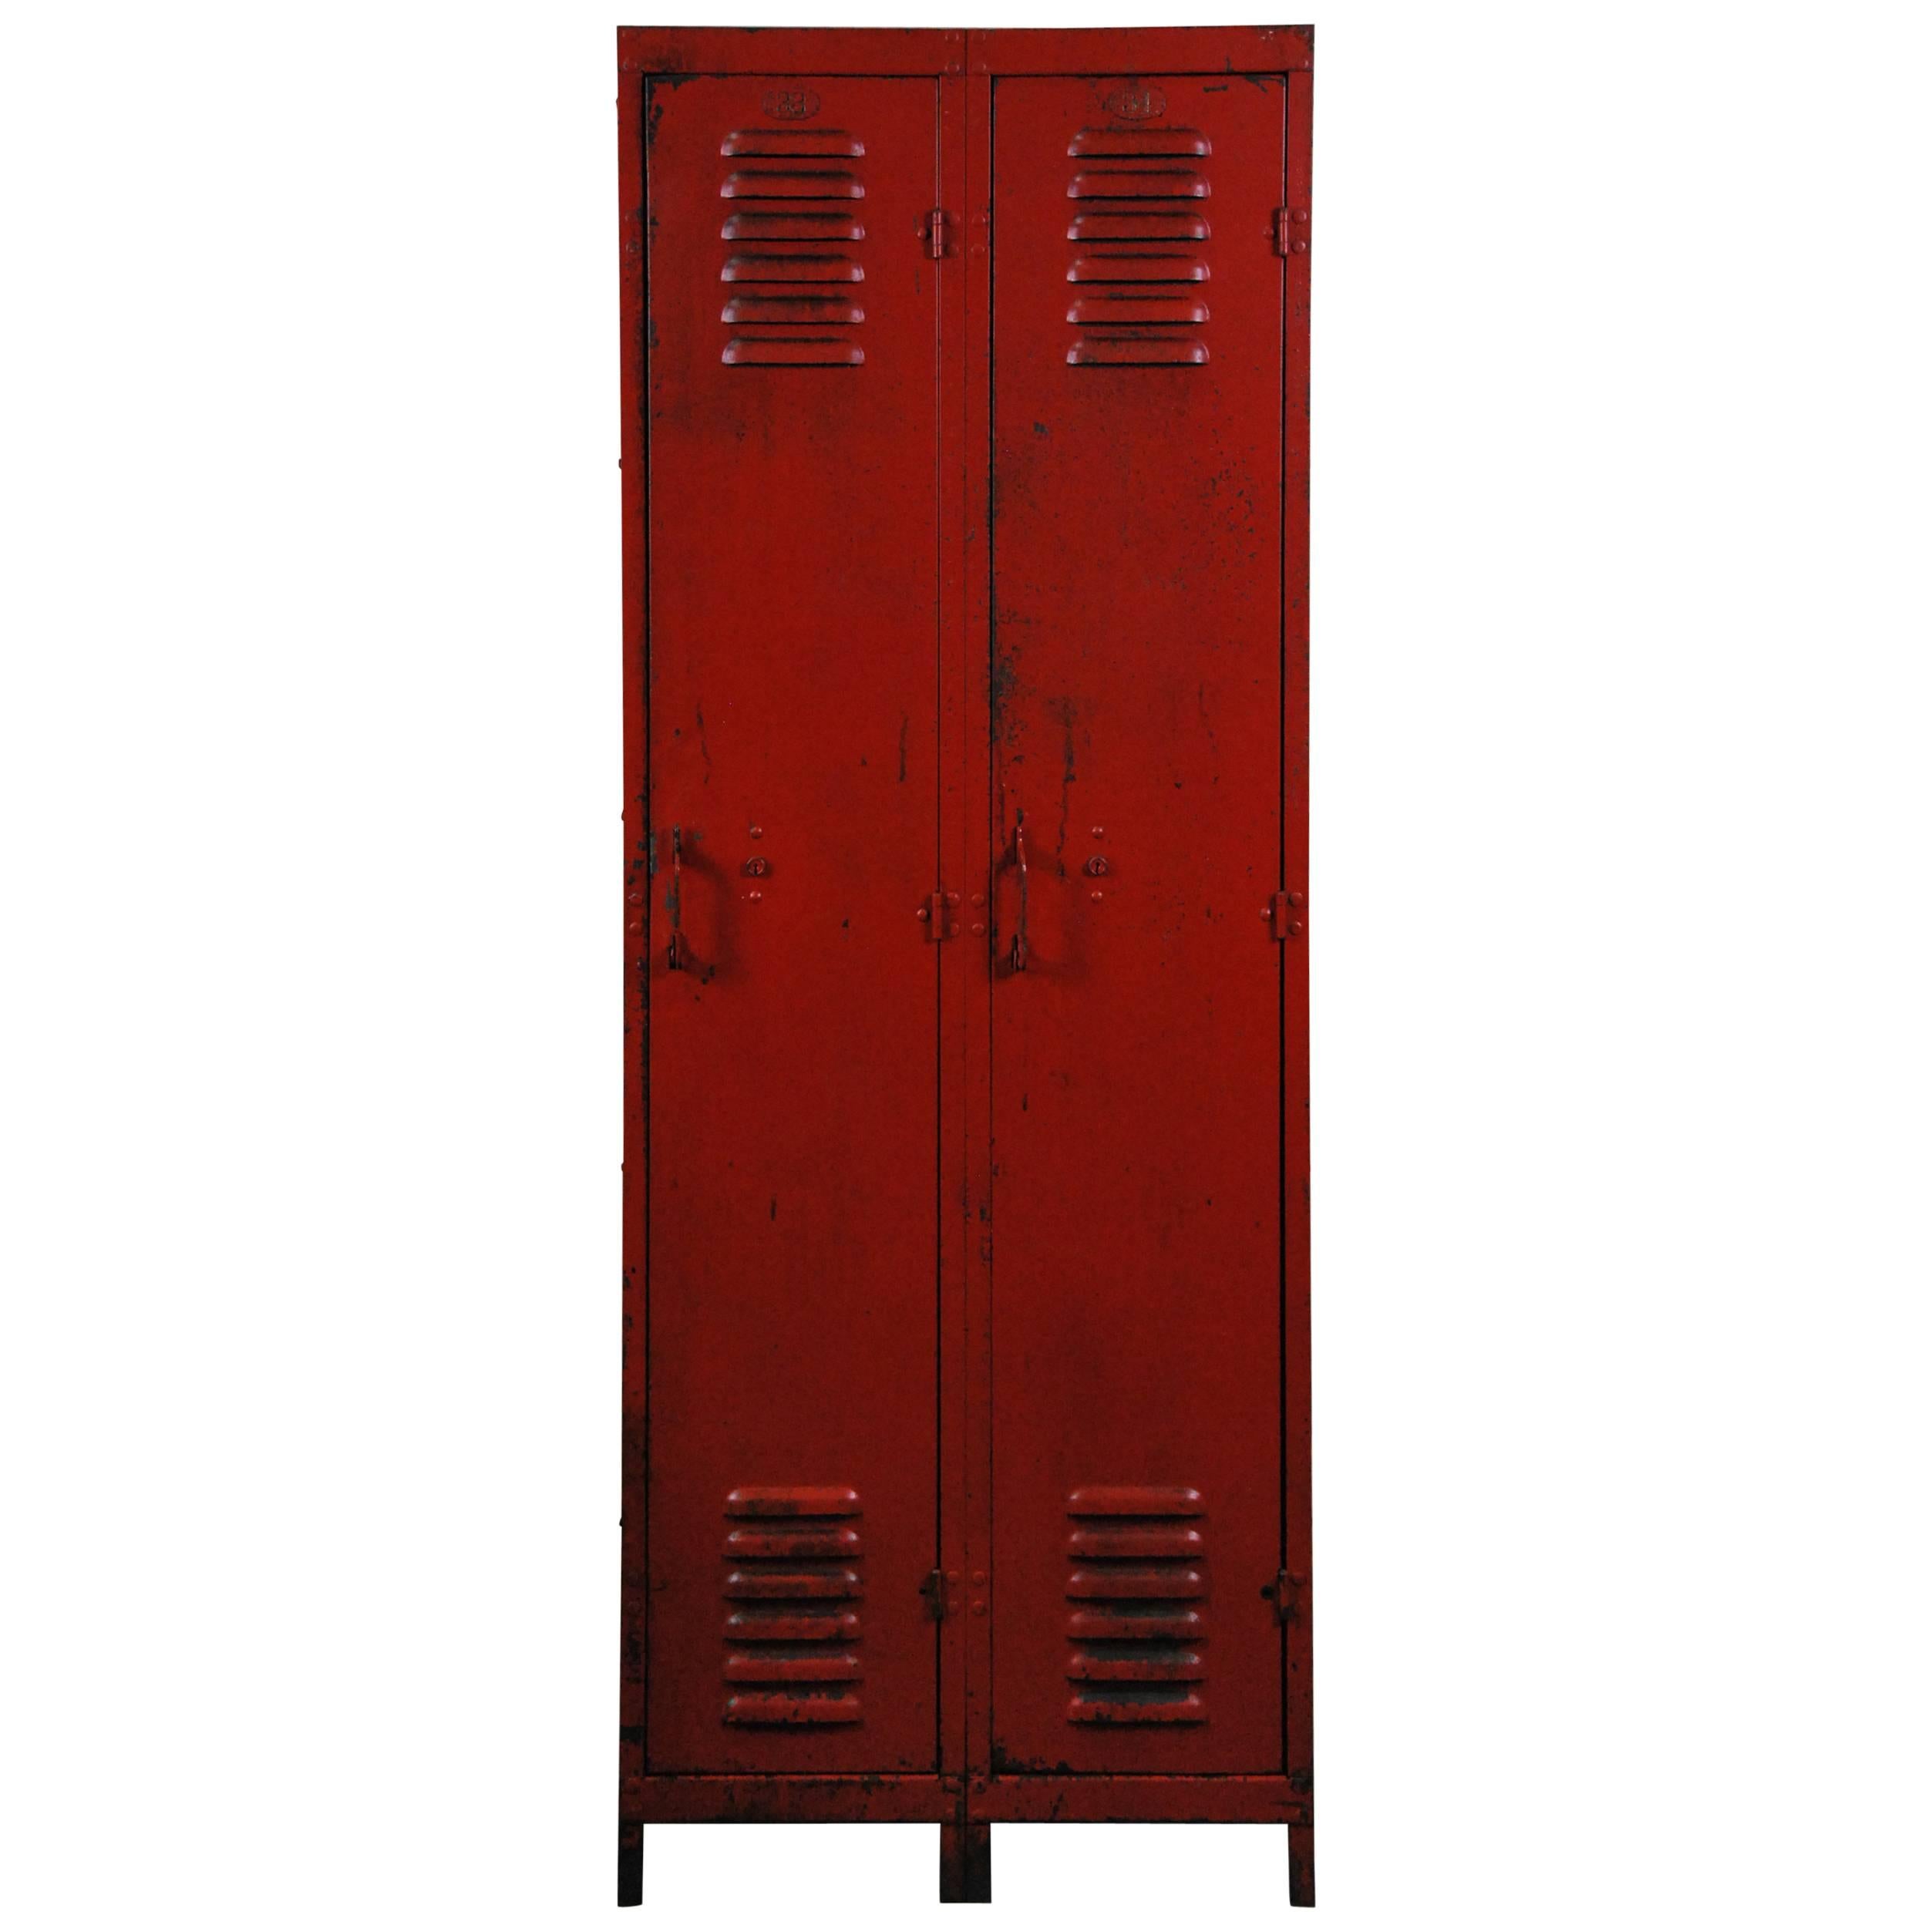 1920 Set of Freestanding Industrial Lockers